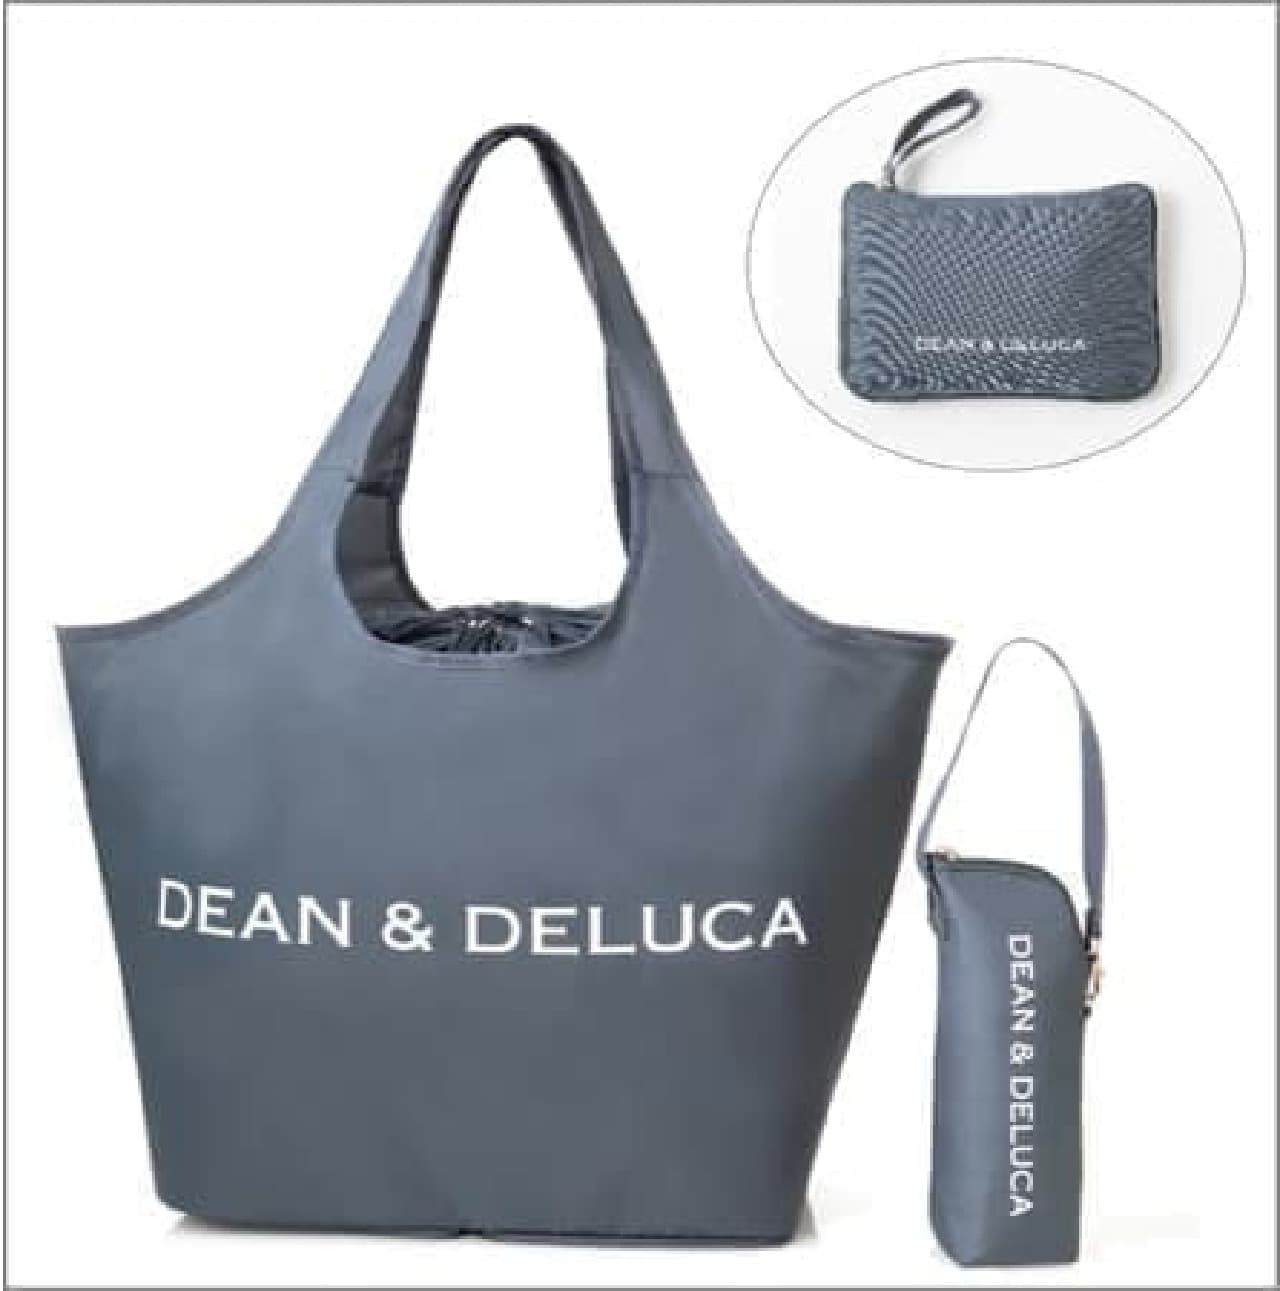 DEAN & DELUCAの「レジかご買物バッグ+ストラップ付き保冷ボトルケース」